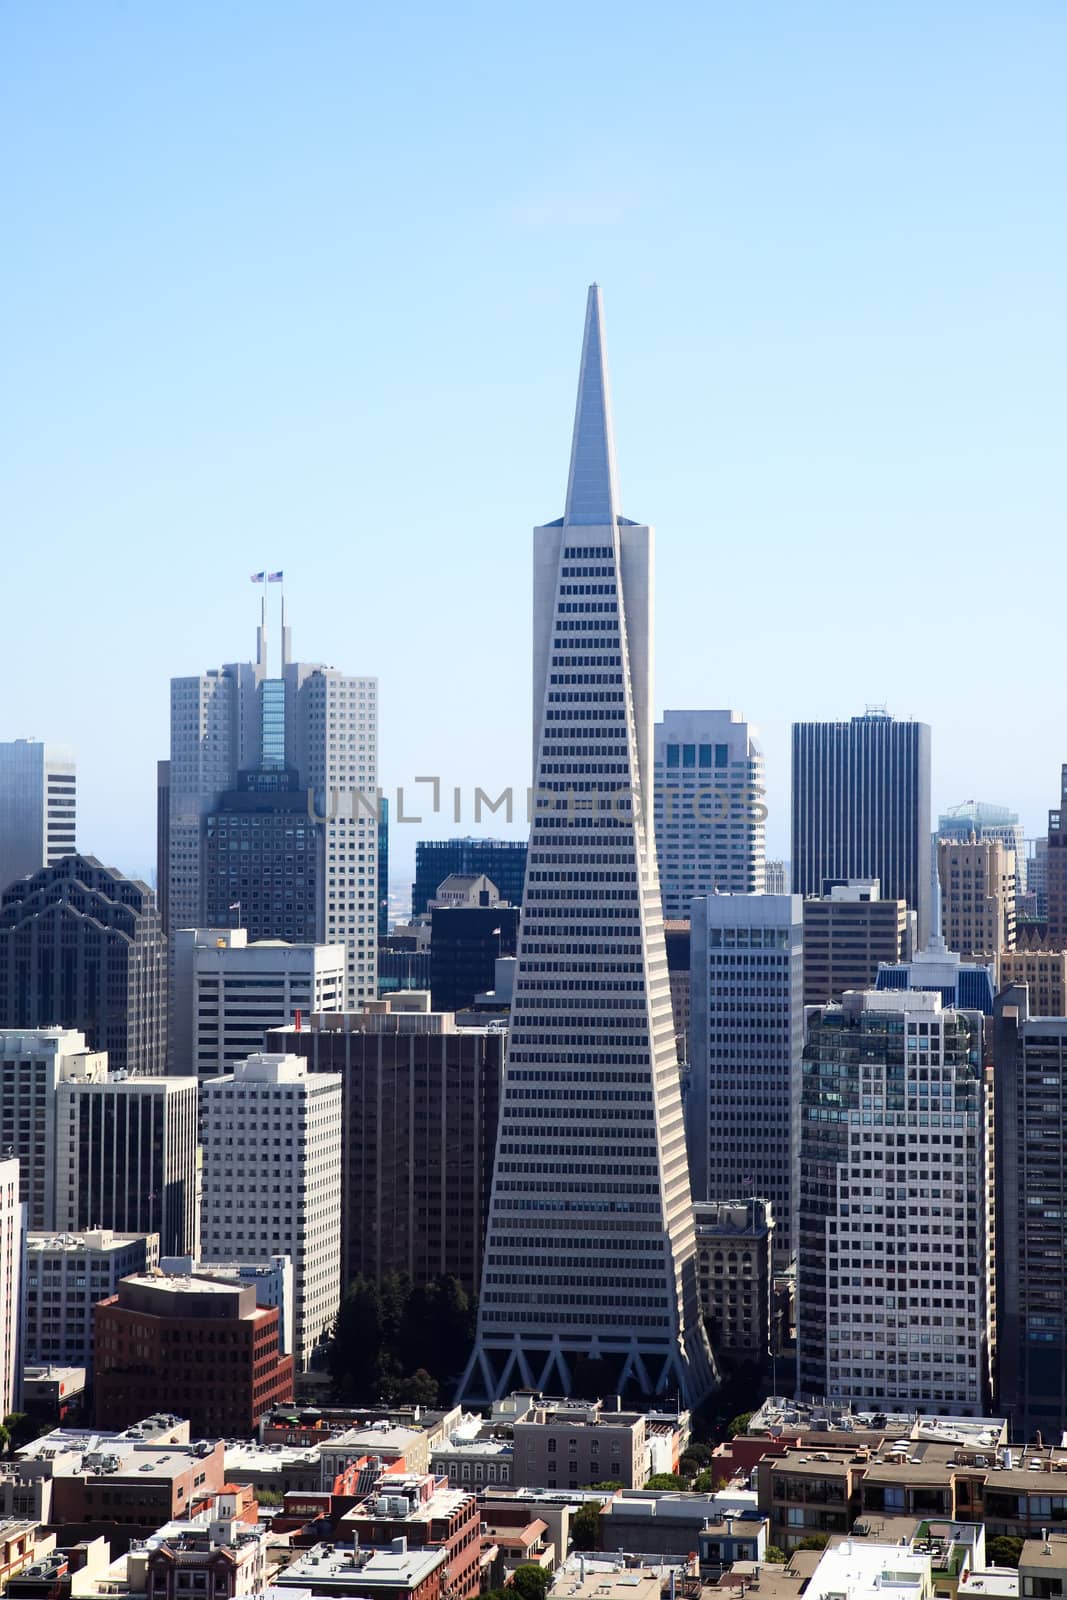 The San Francisco skylines in California USA 